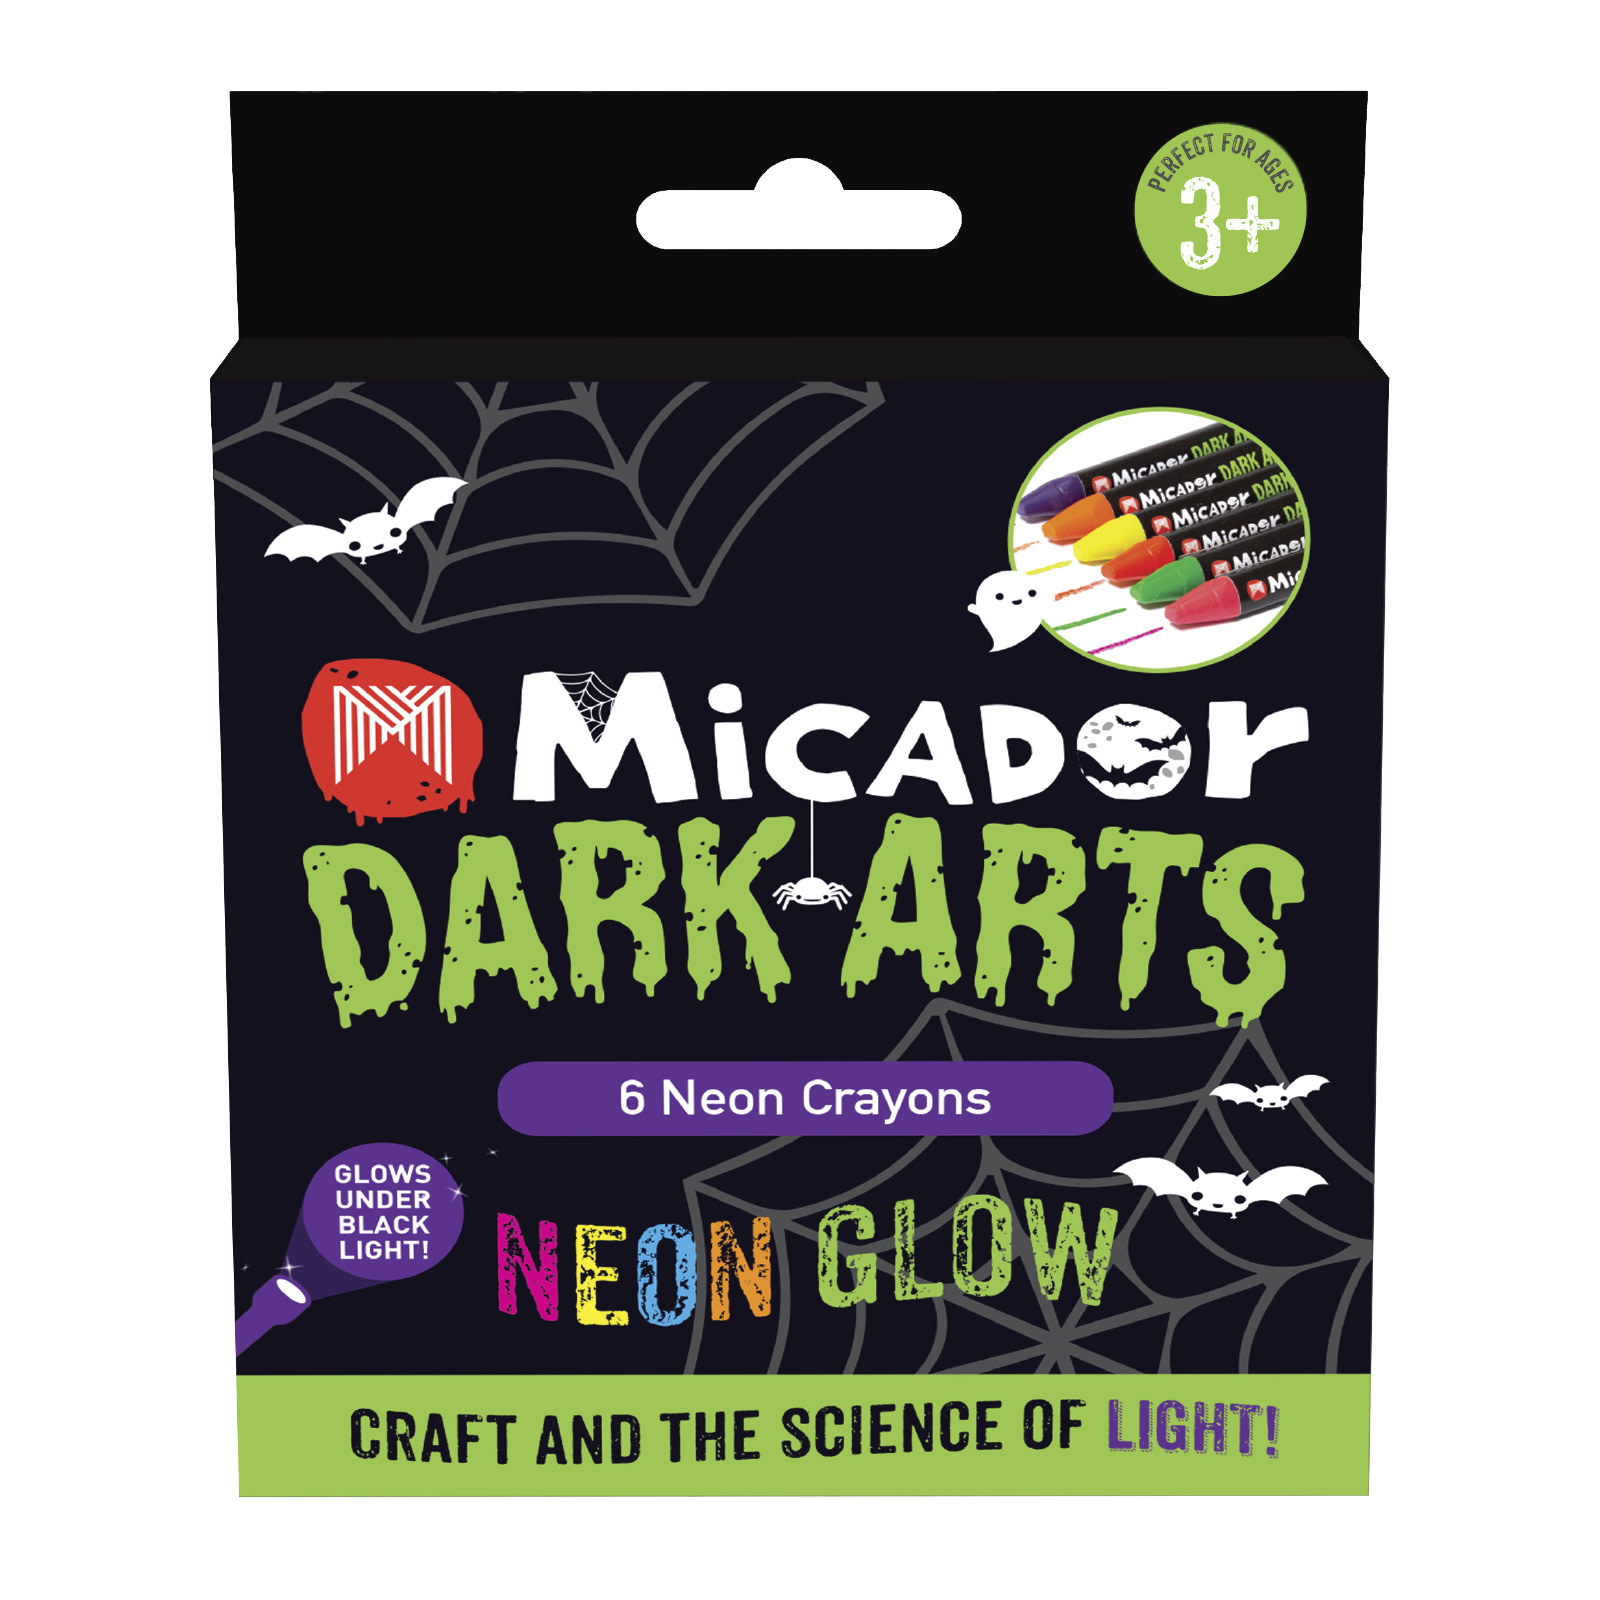 Micador Dark Arts Neon Glow Crayons Pack